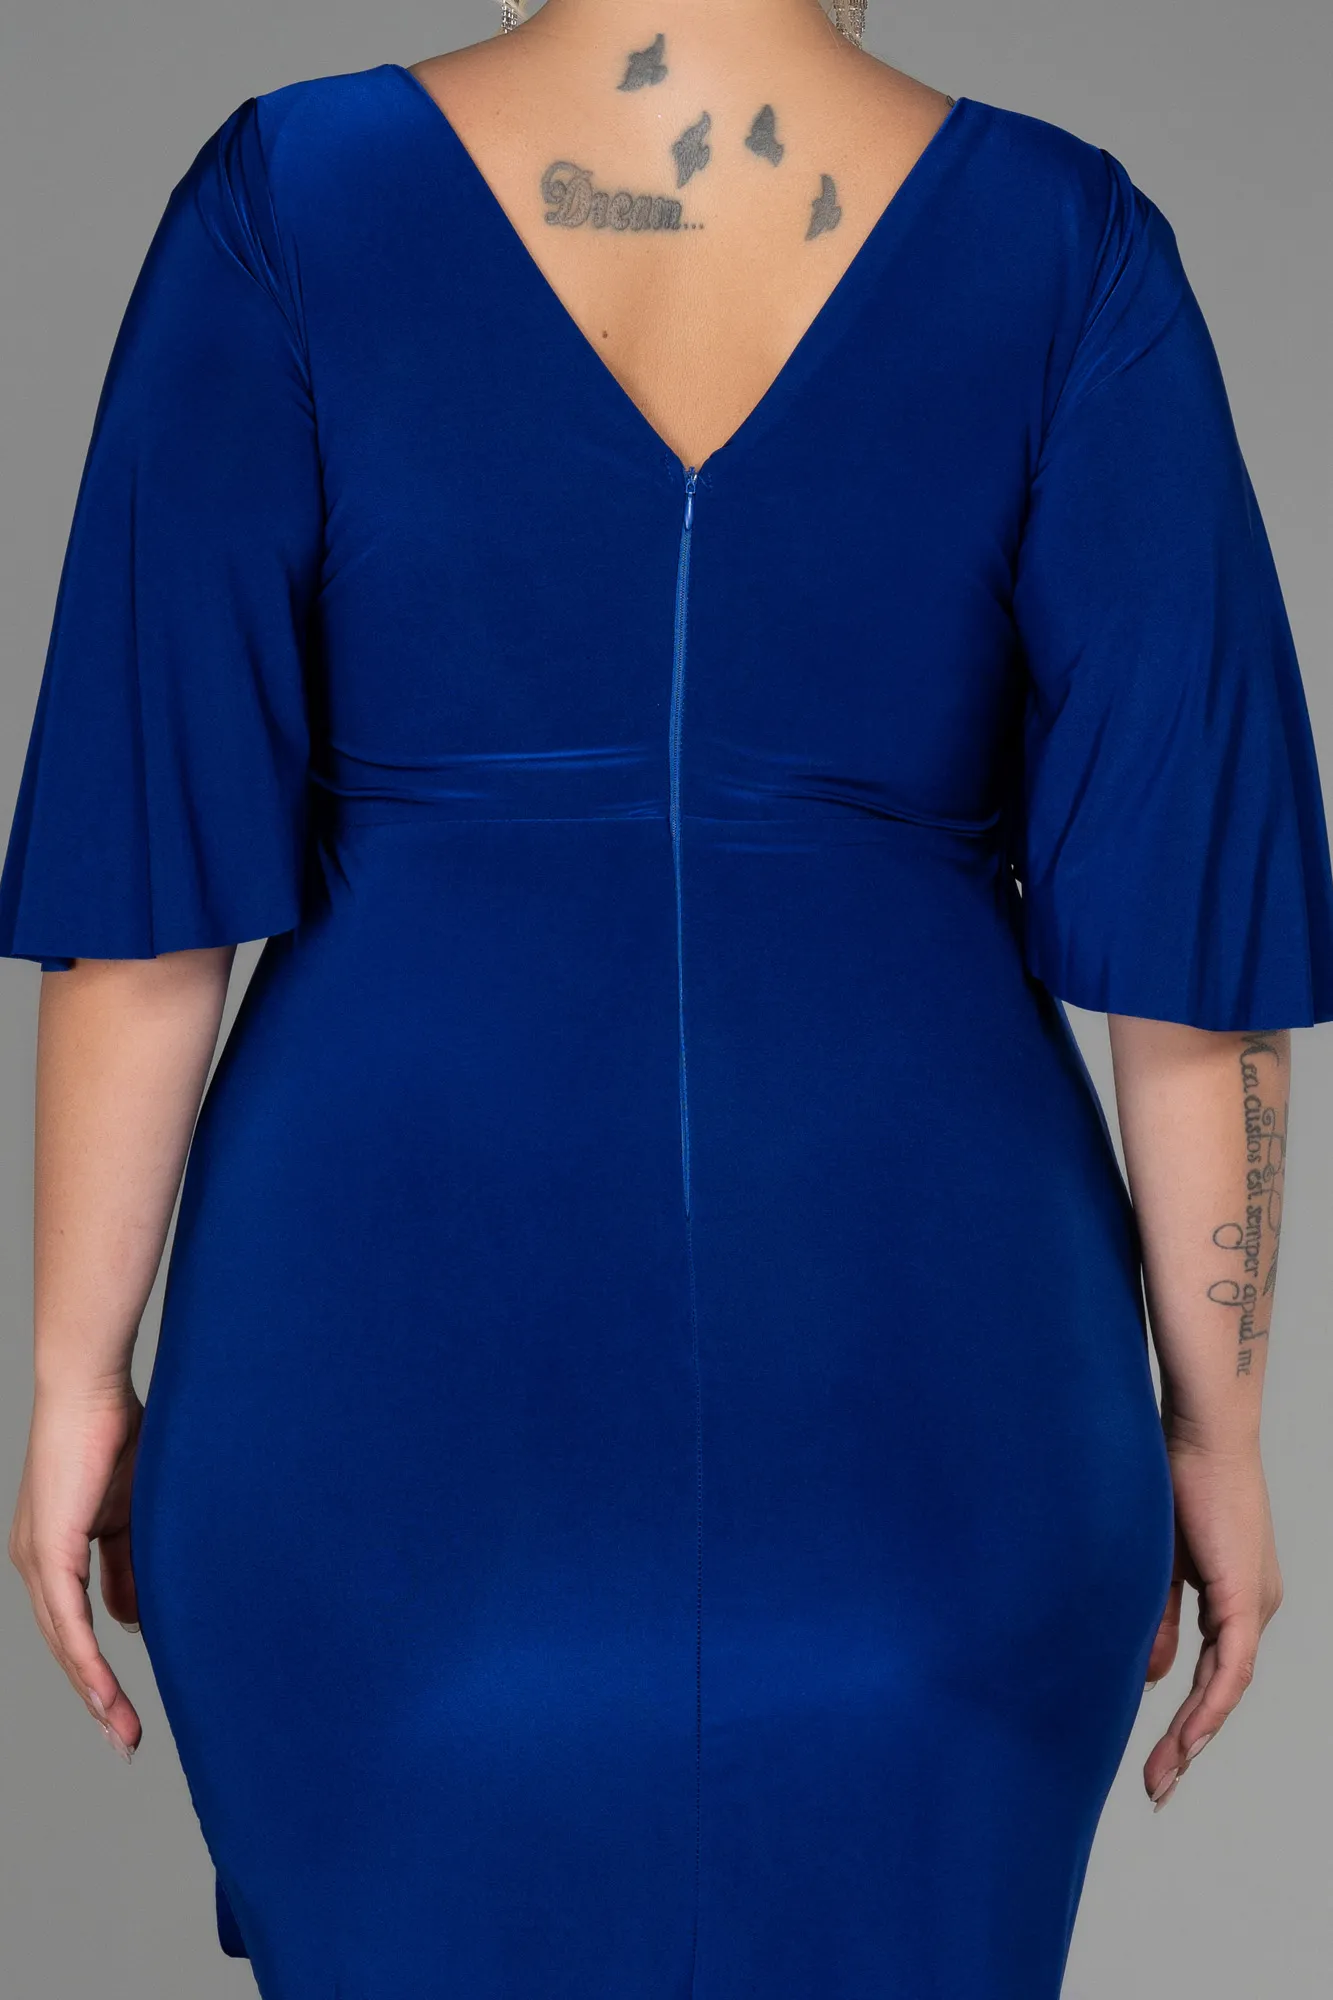 Sax Blue-Midi Plus Size Evening Dress ABK1801